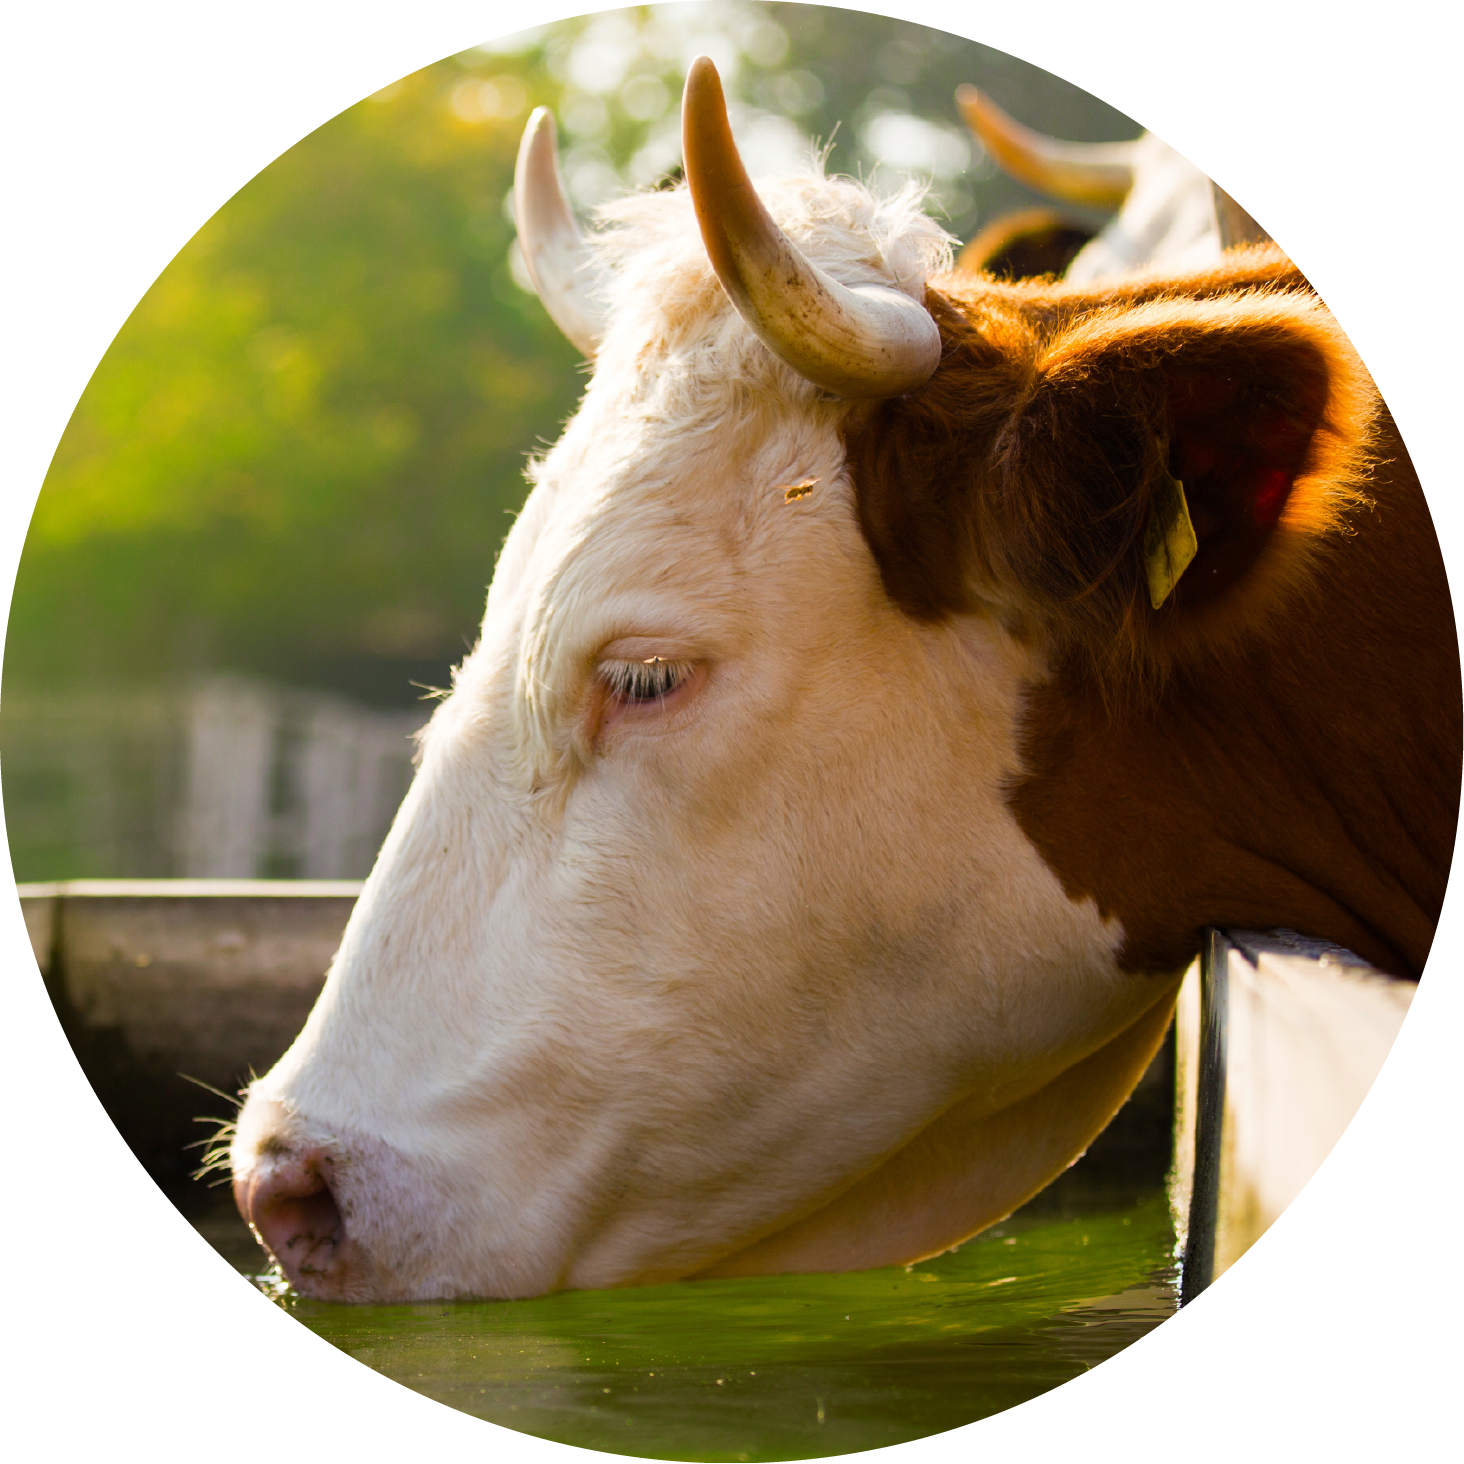 Image-Carousel_Livestock-Tanks_Cow